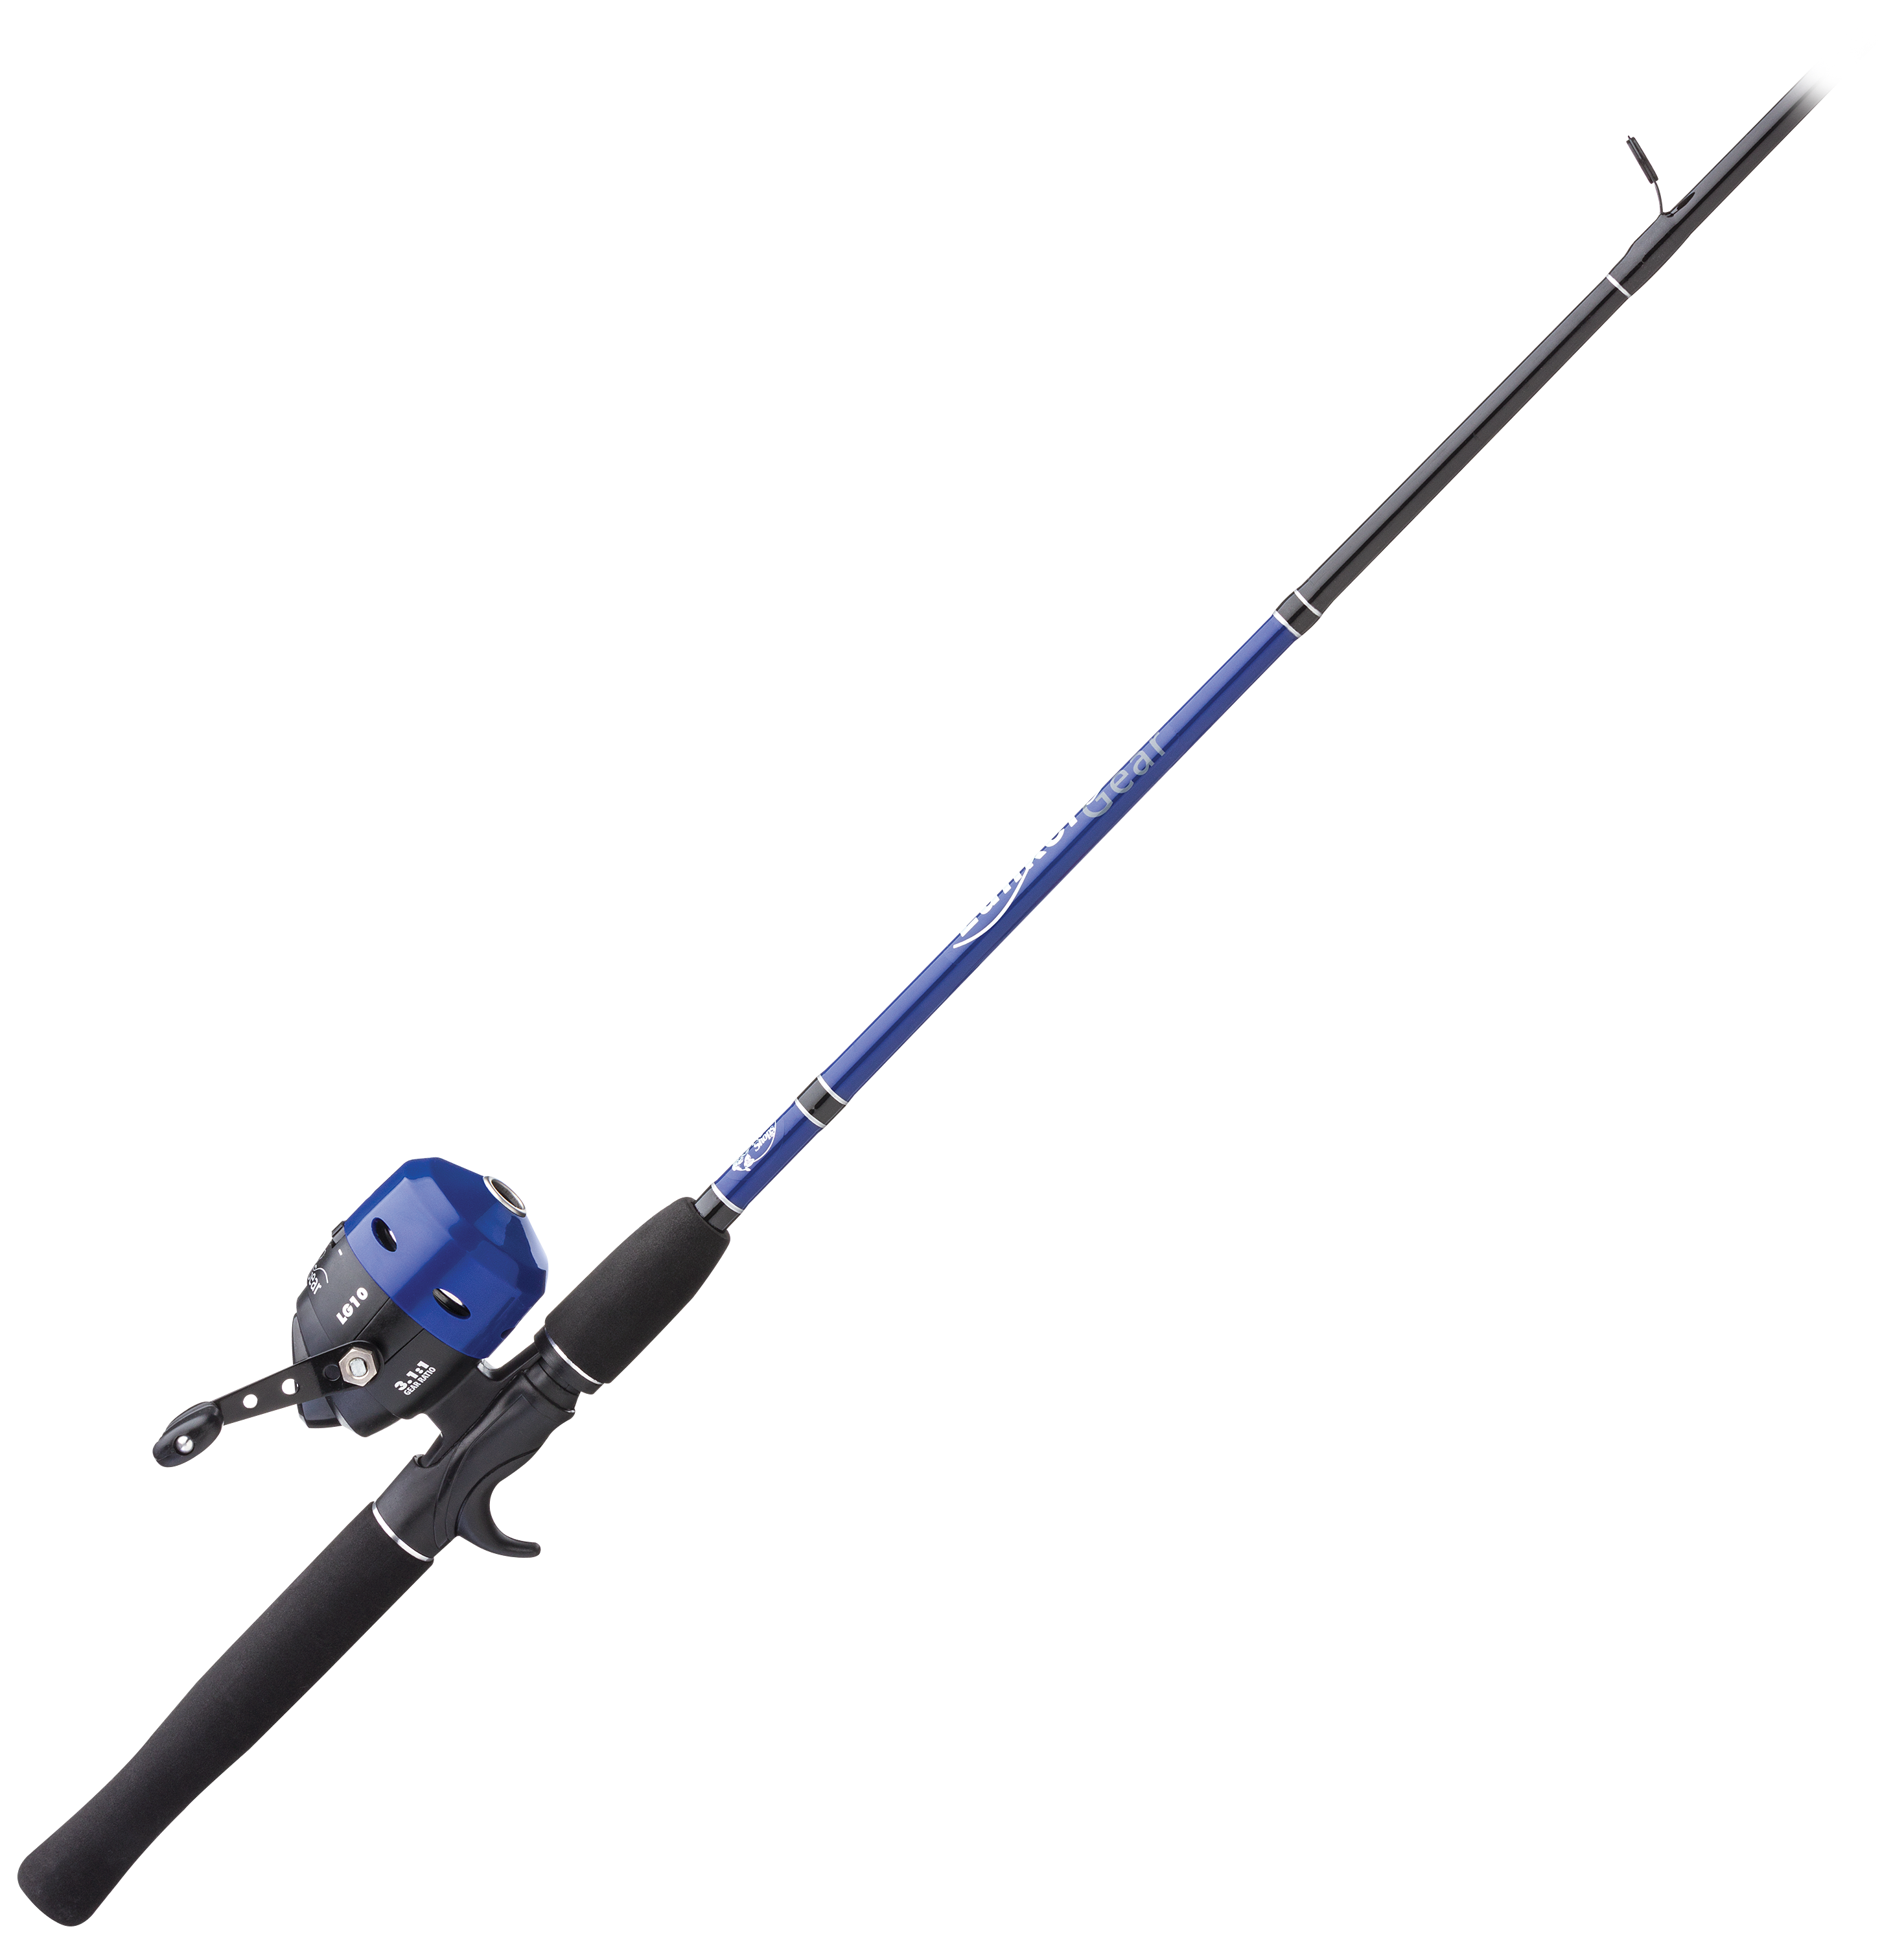 Fishing Rod and Reel Combo - 4' 2 Fiberglass Pole, Spincast Reel